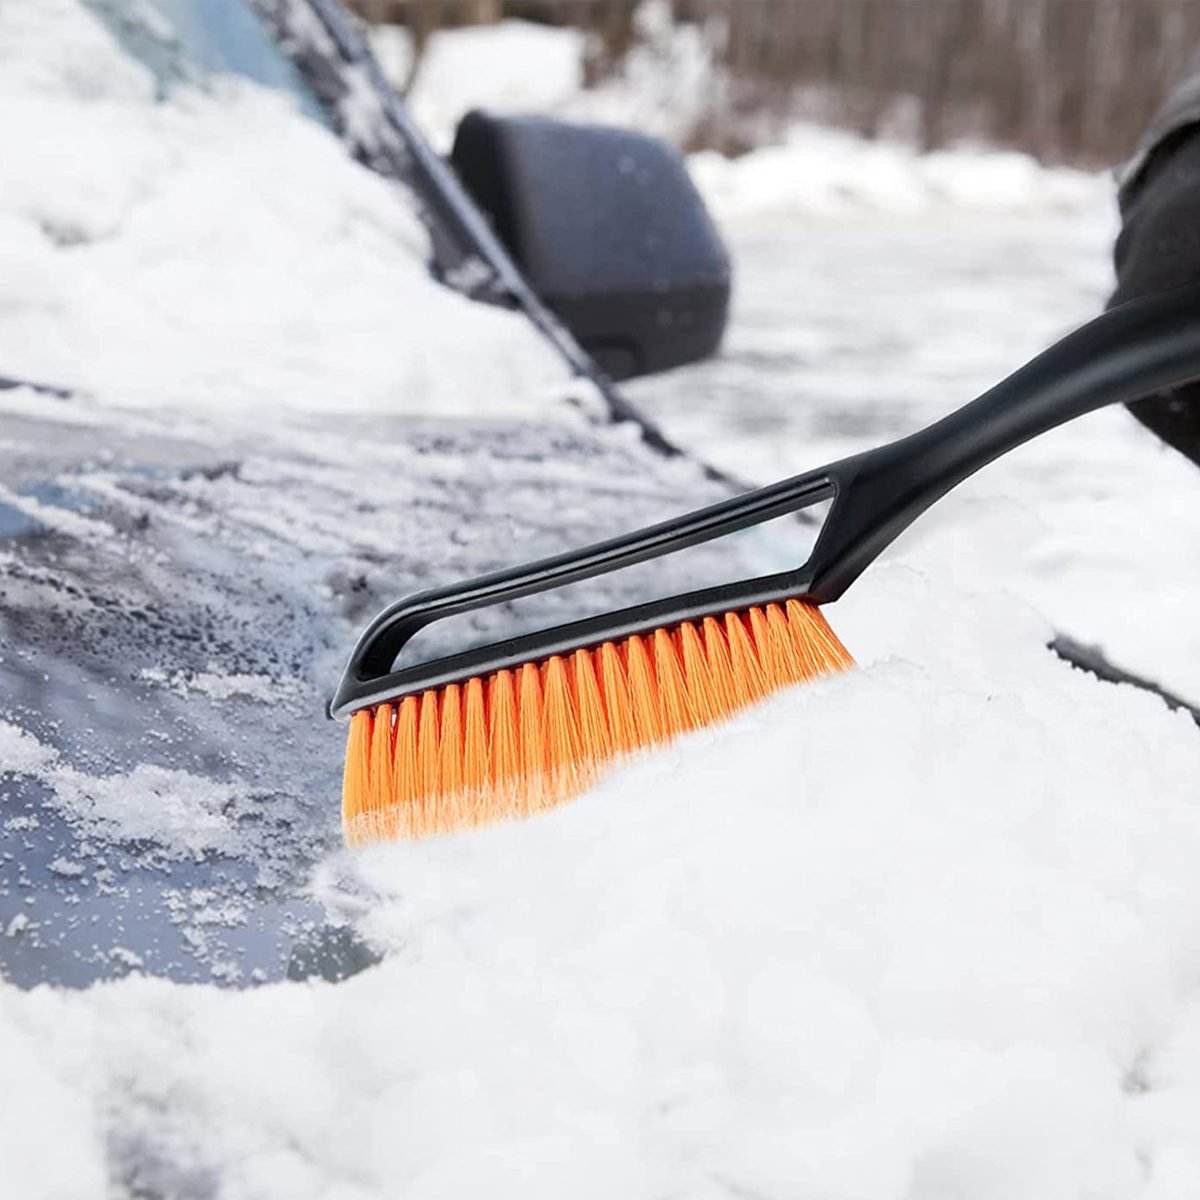 Get a Snow Broom for Safe Car Snow Removal 